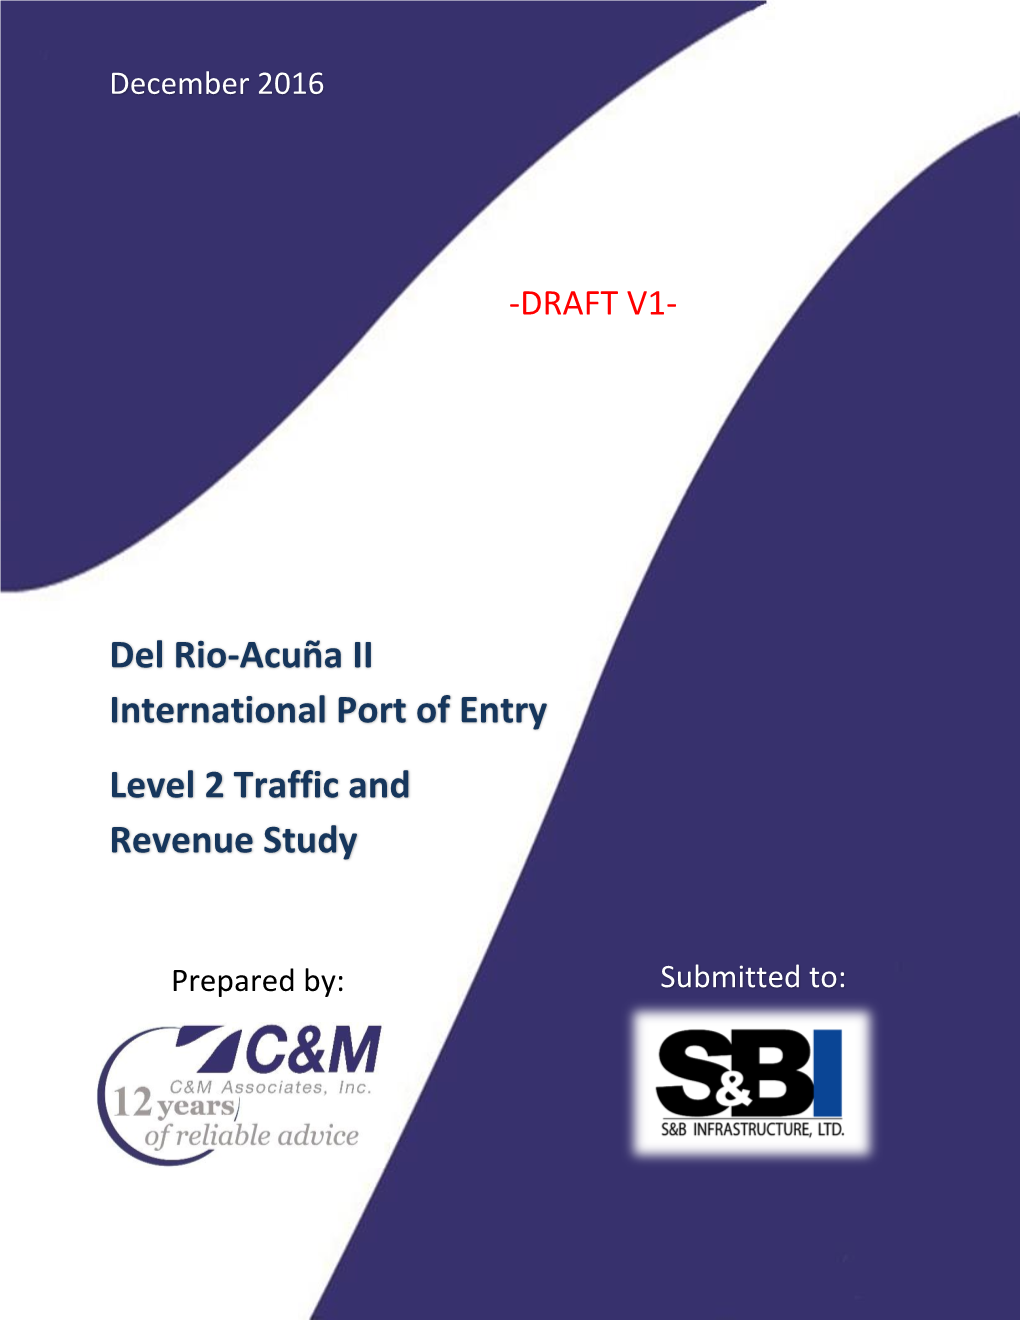 Del Rio-Acuña II International Port of Entry Level 2 Traffic and Revenue Study